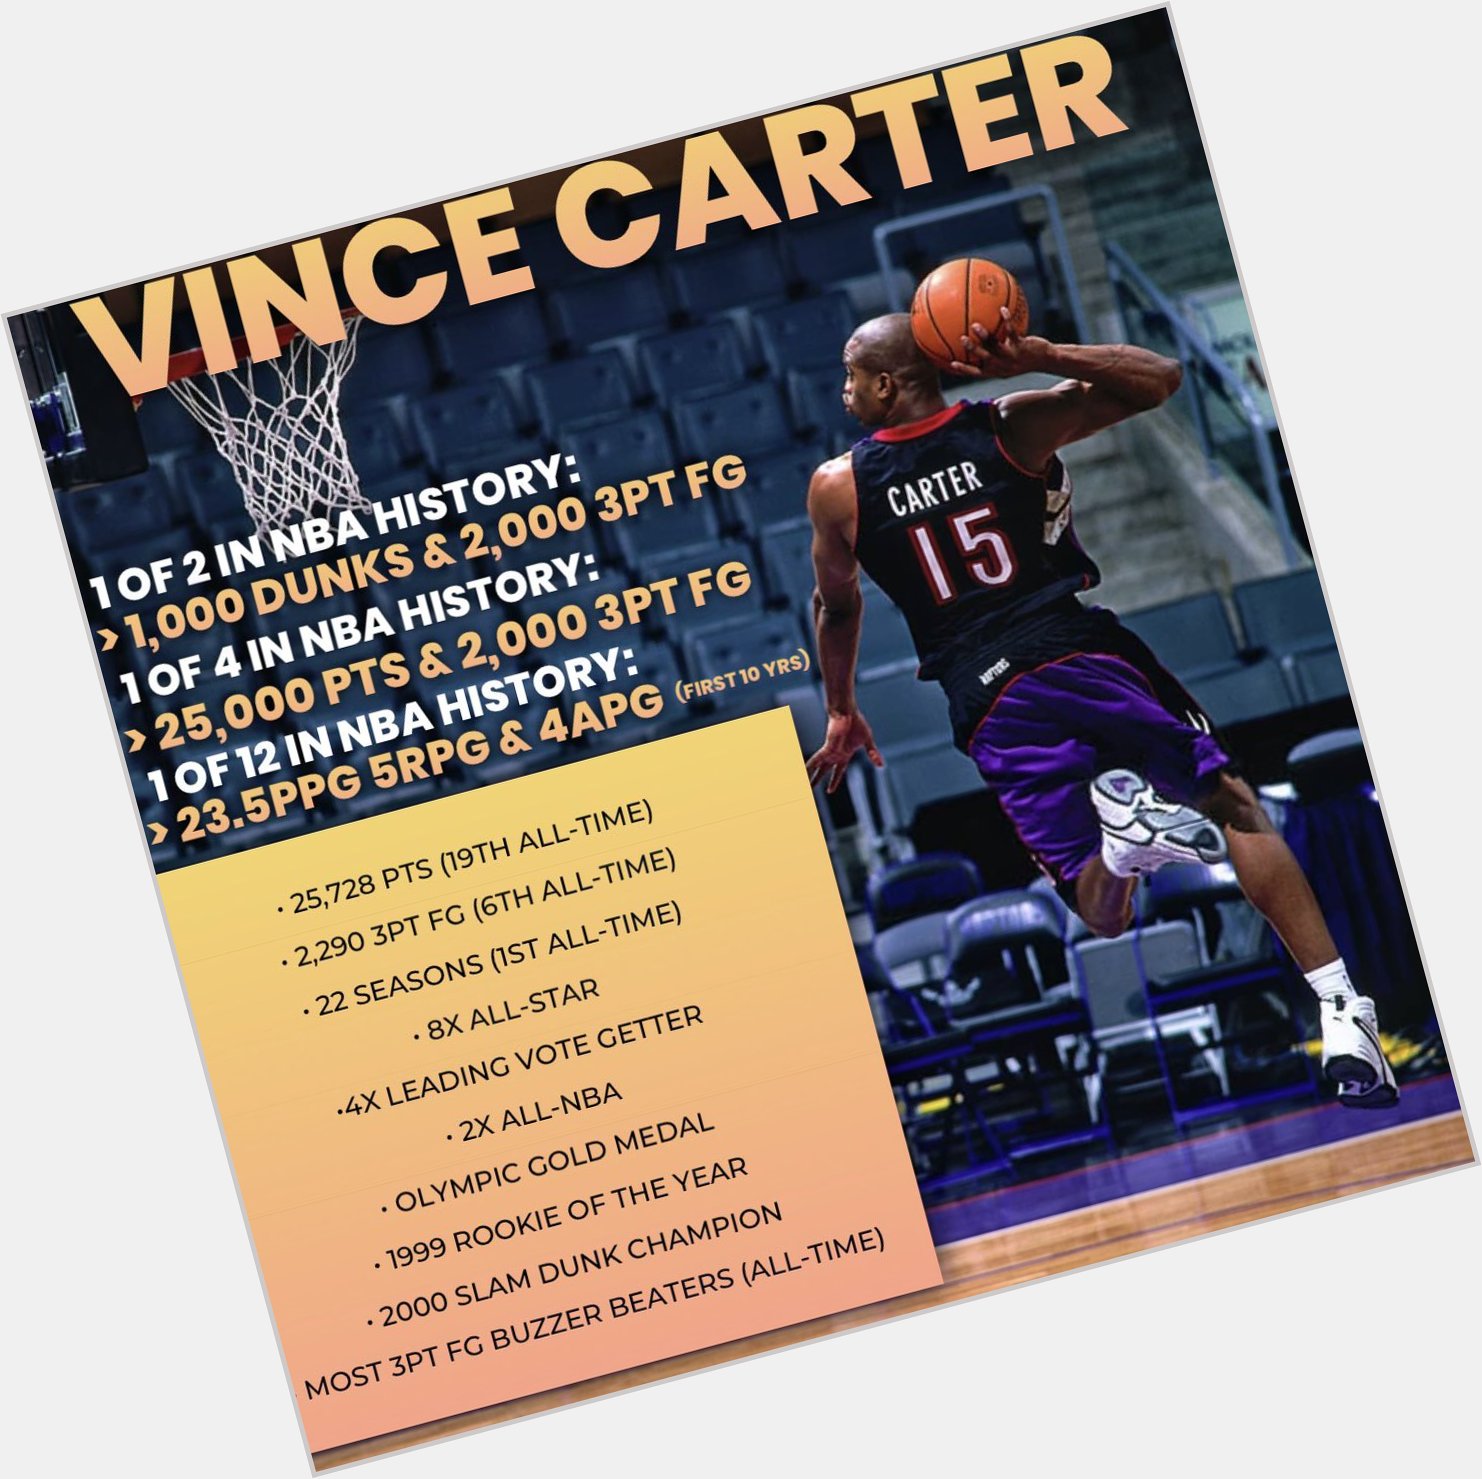  Happy Birthday Vince Carter!! 